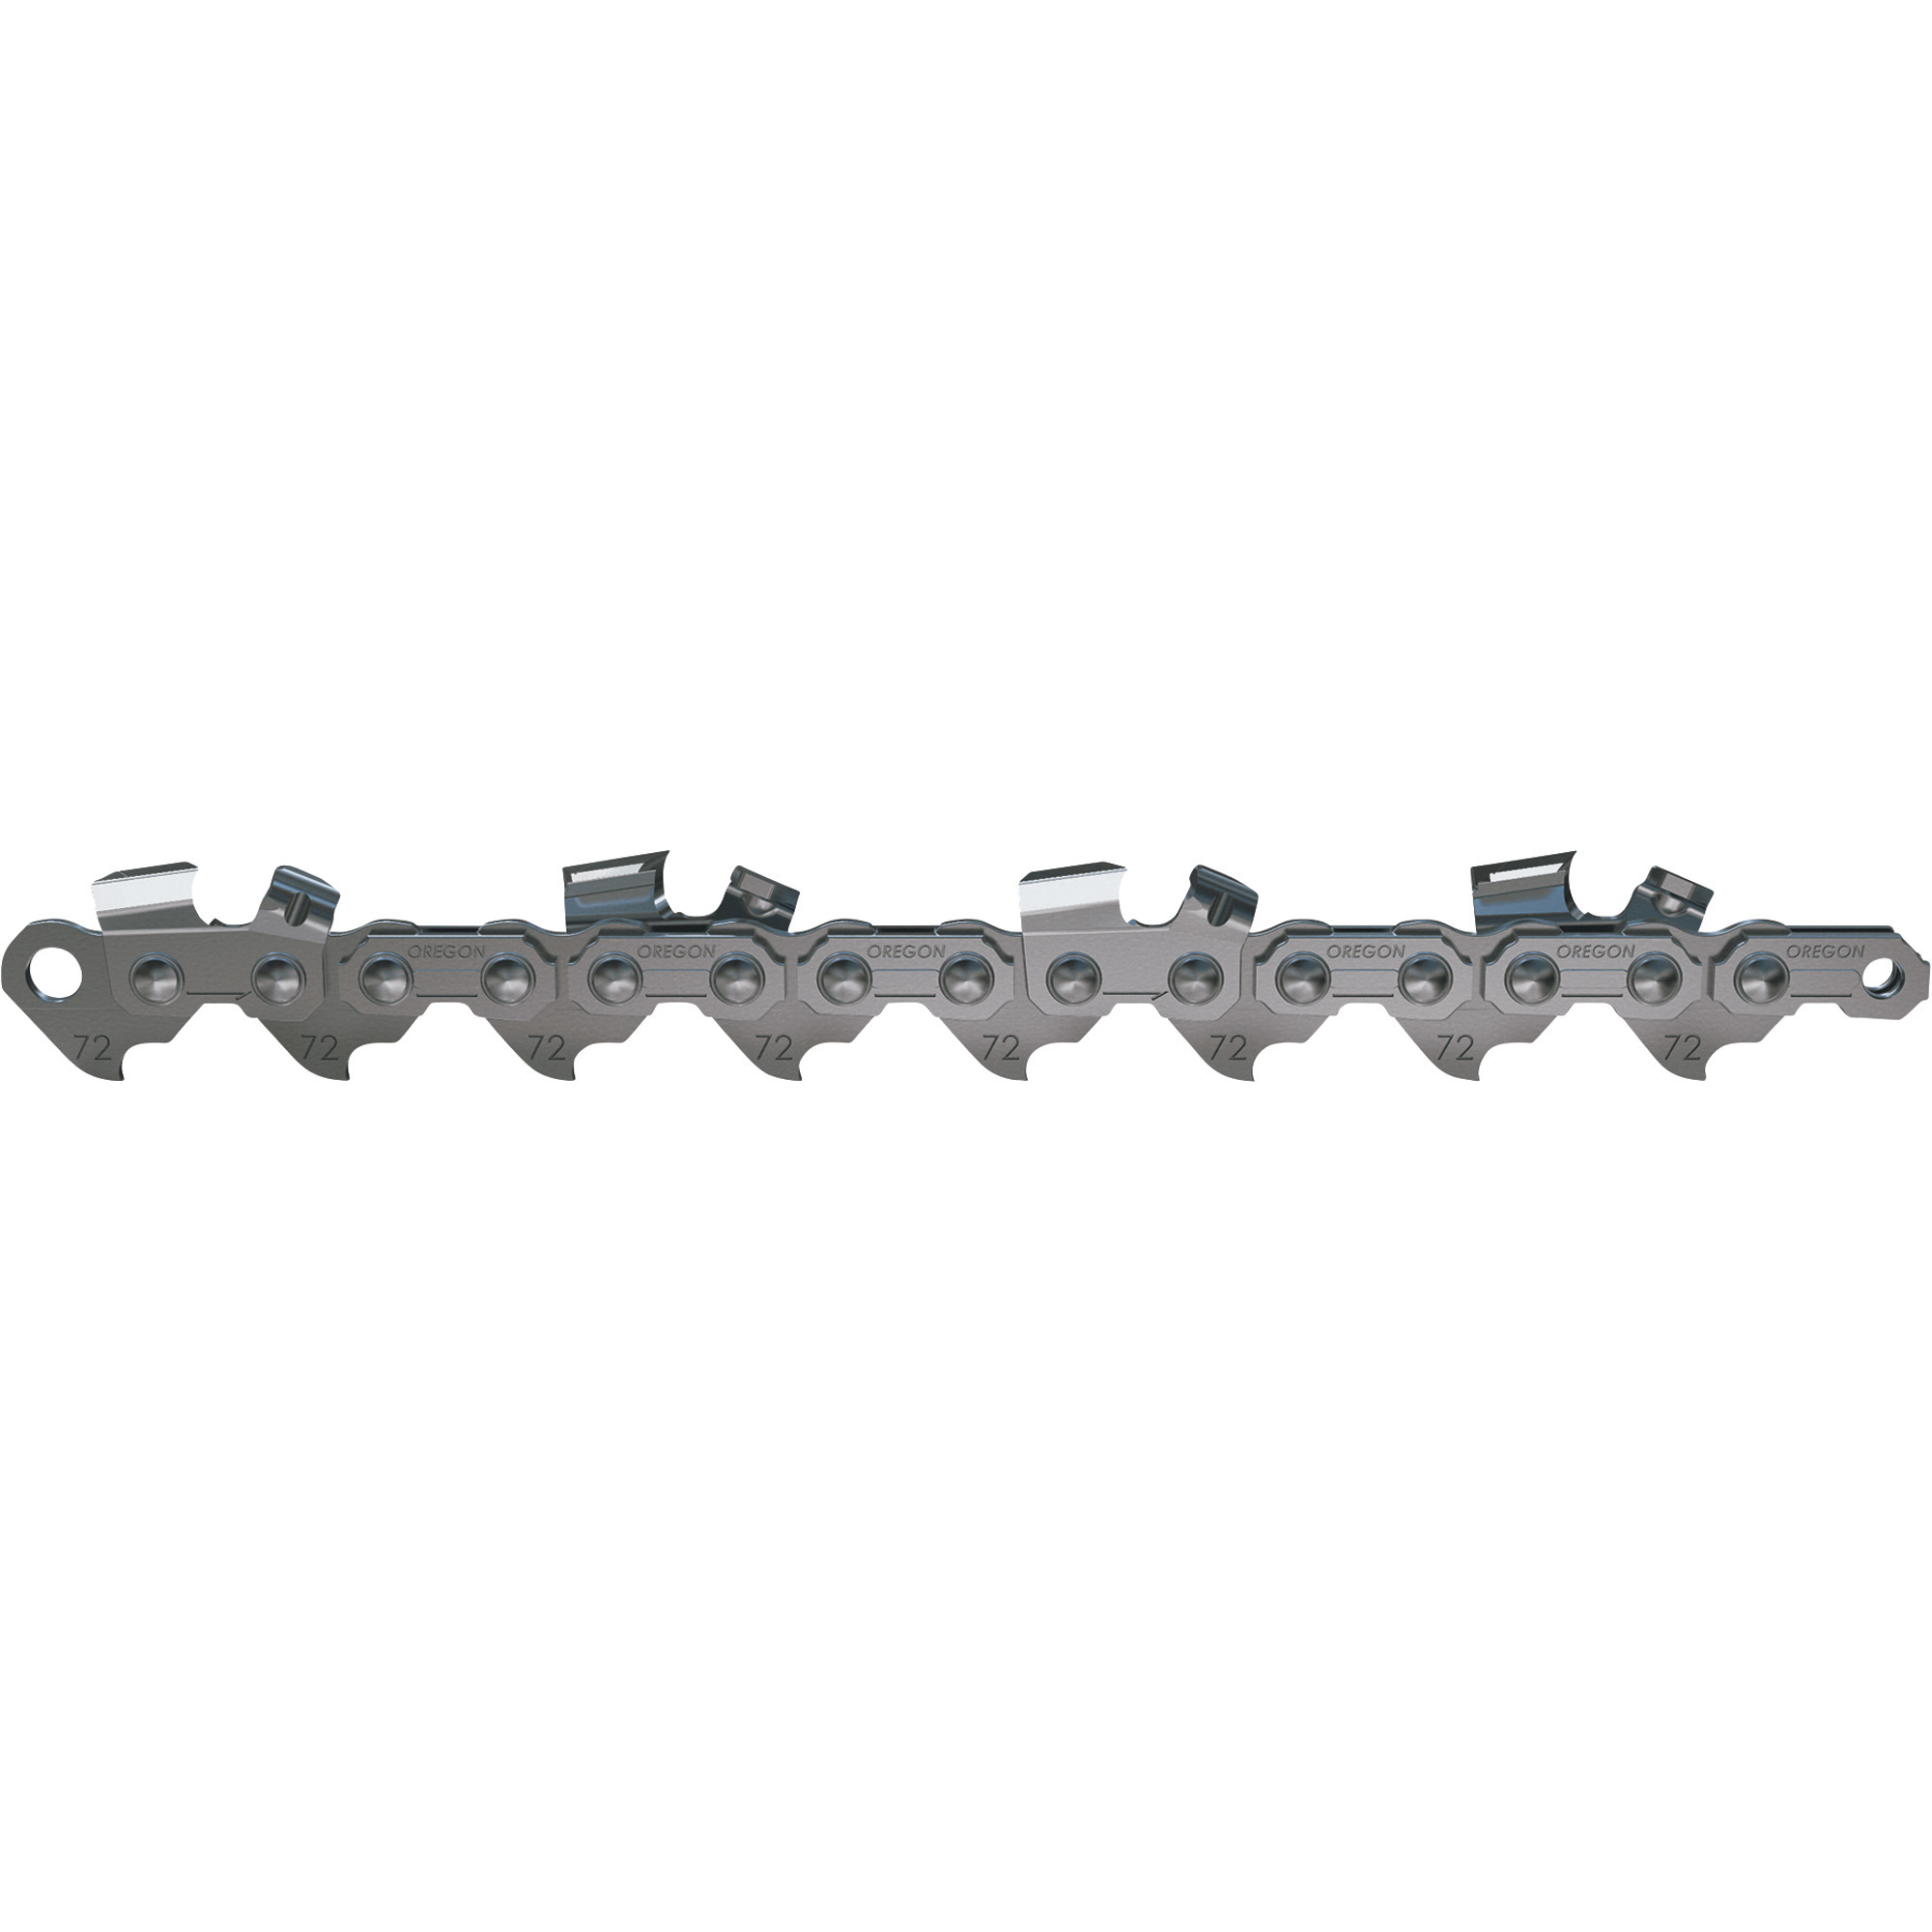 Oregon Low Kickback Chainsaw Chain, 3/8Inch x 0.050Inch, Fits 16Inch Bar, Model D60/72V060G